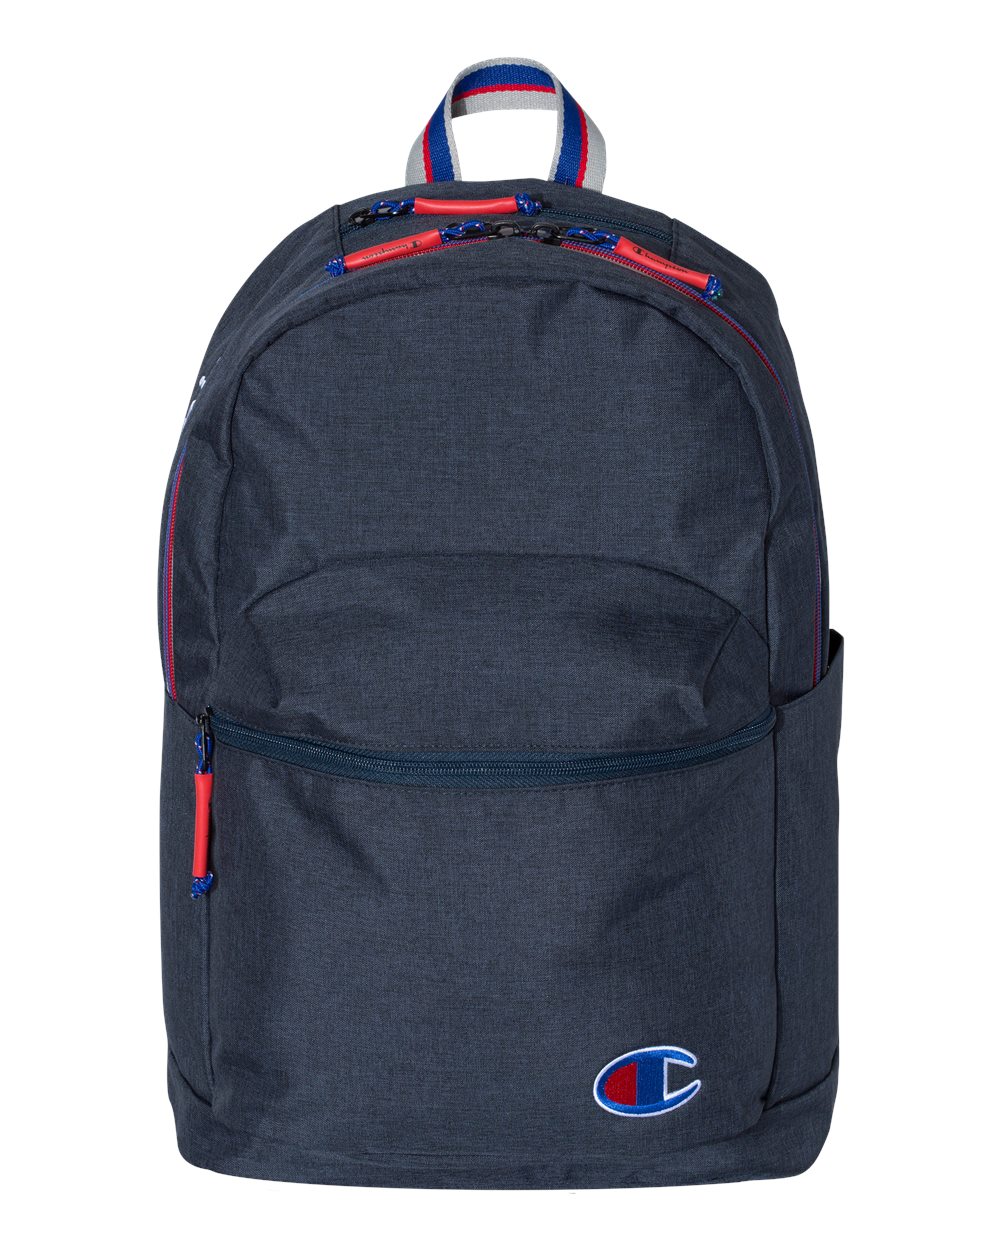 Champion 21L Backpack School Bag Books CS1002, 12 x 18 x 6 | eBay